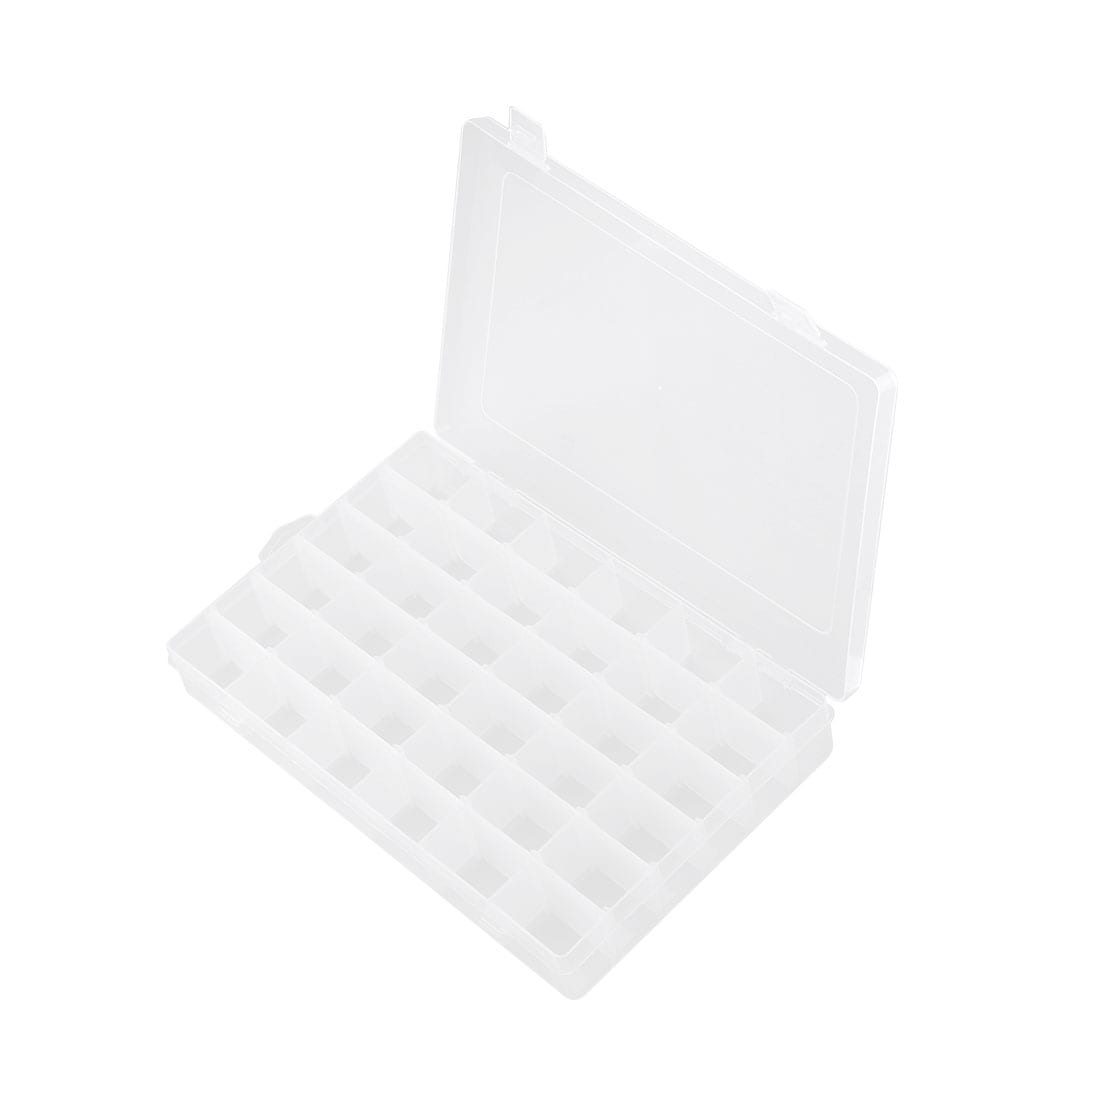 Unique-bargains 36 Grids Grid Storage Box Removeable PP Plastic Case for Small Jewelry - Clear - 36Grids 27.4x17.6cm